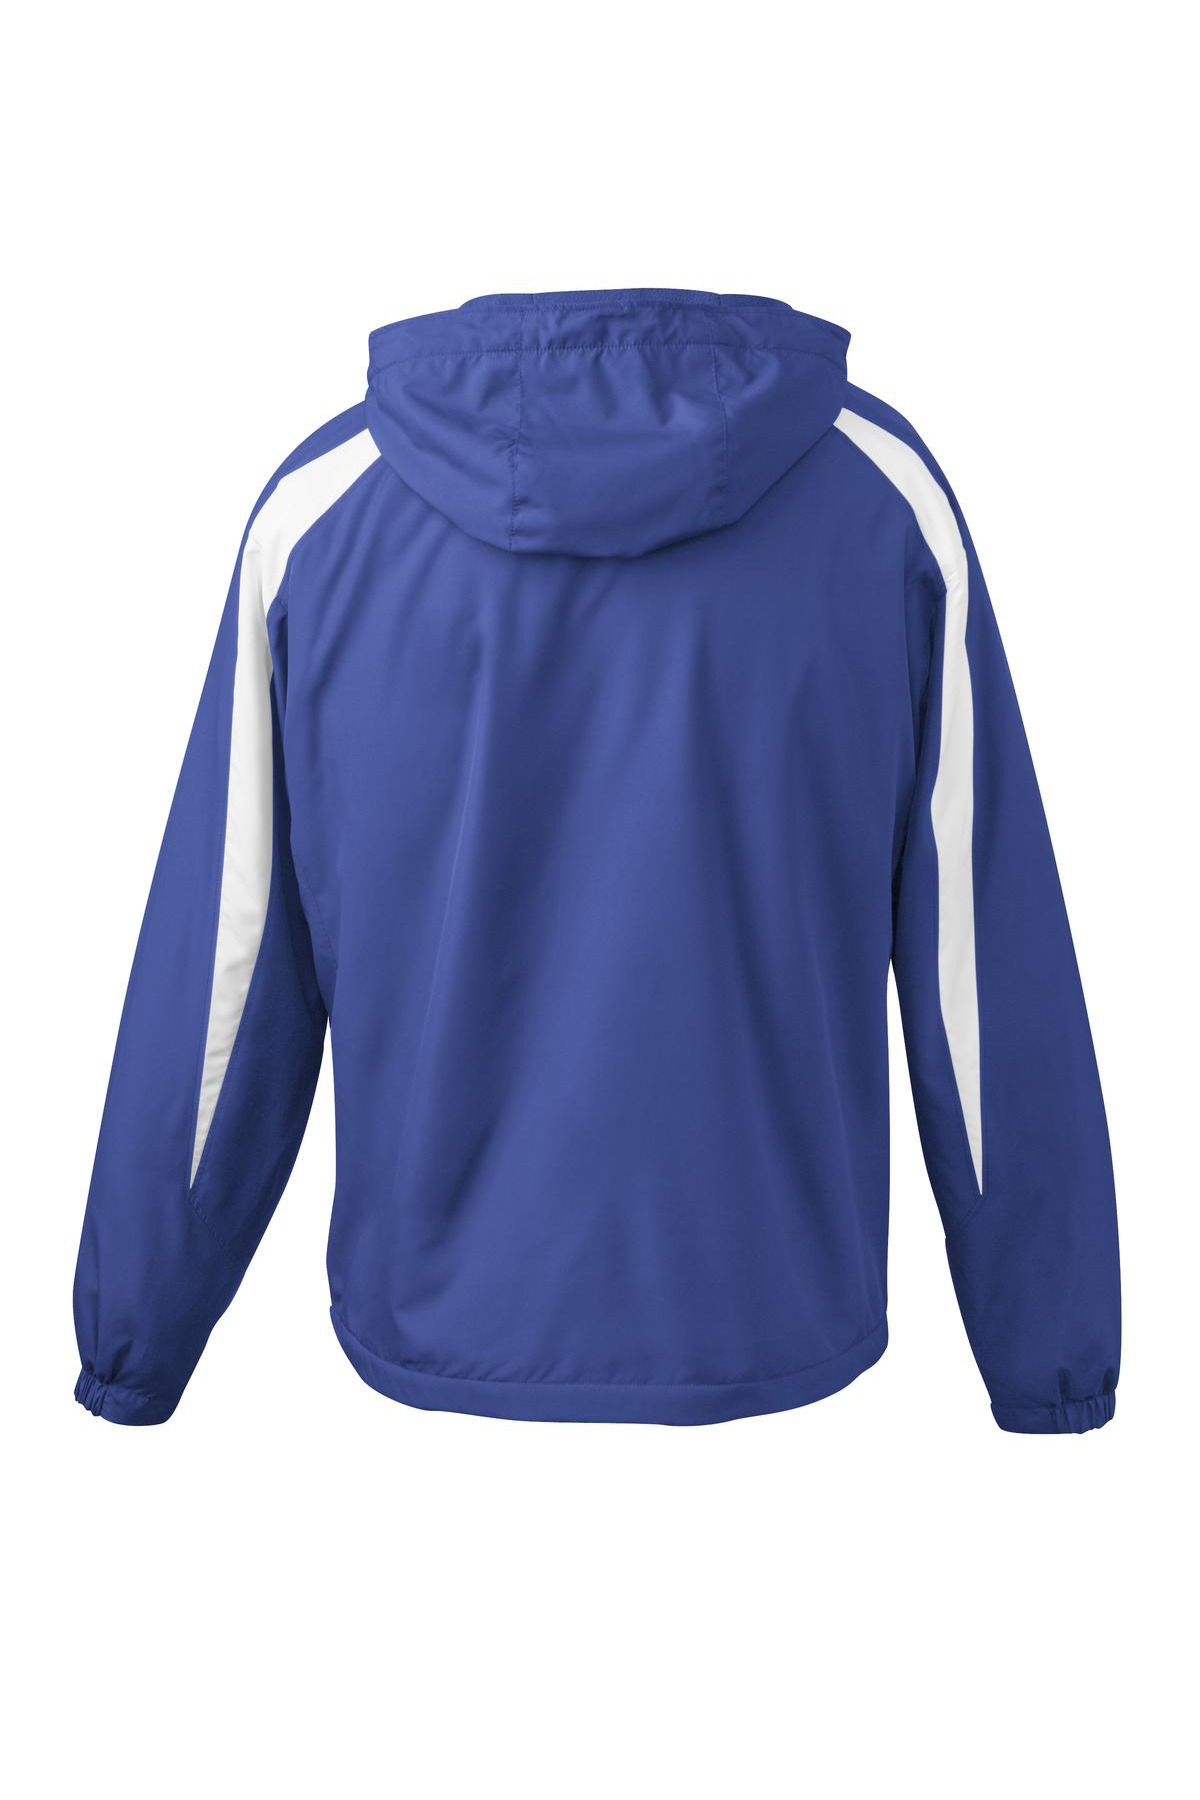 Sport-Tek Fleece-Lined Colorblock Jacket | Product | Sport-Tek